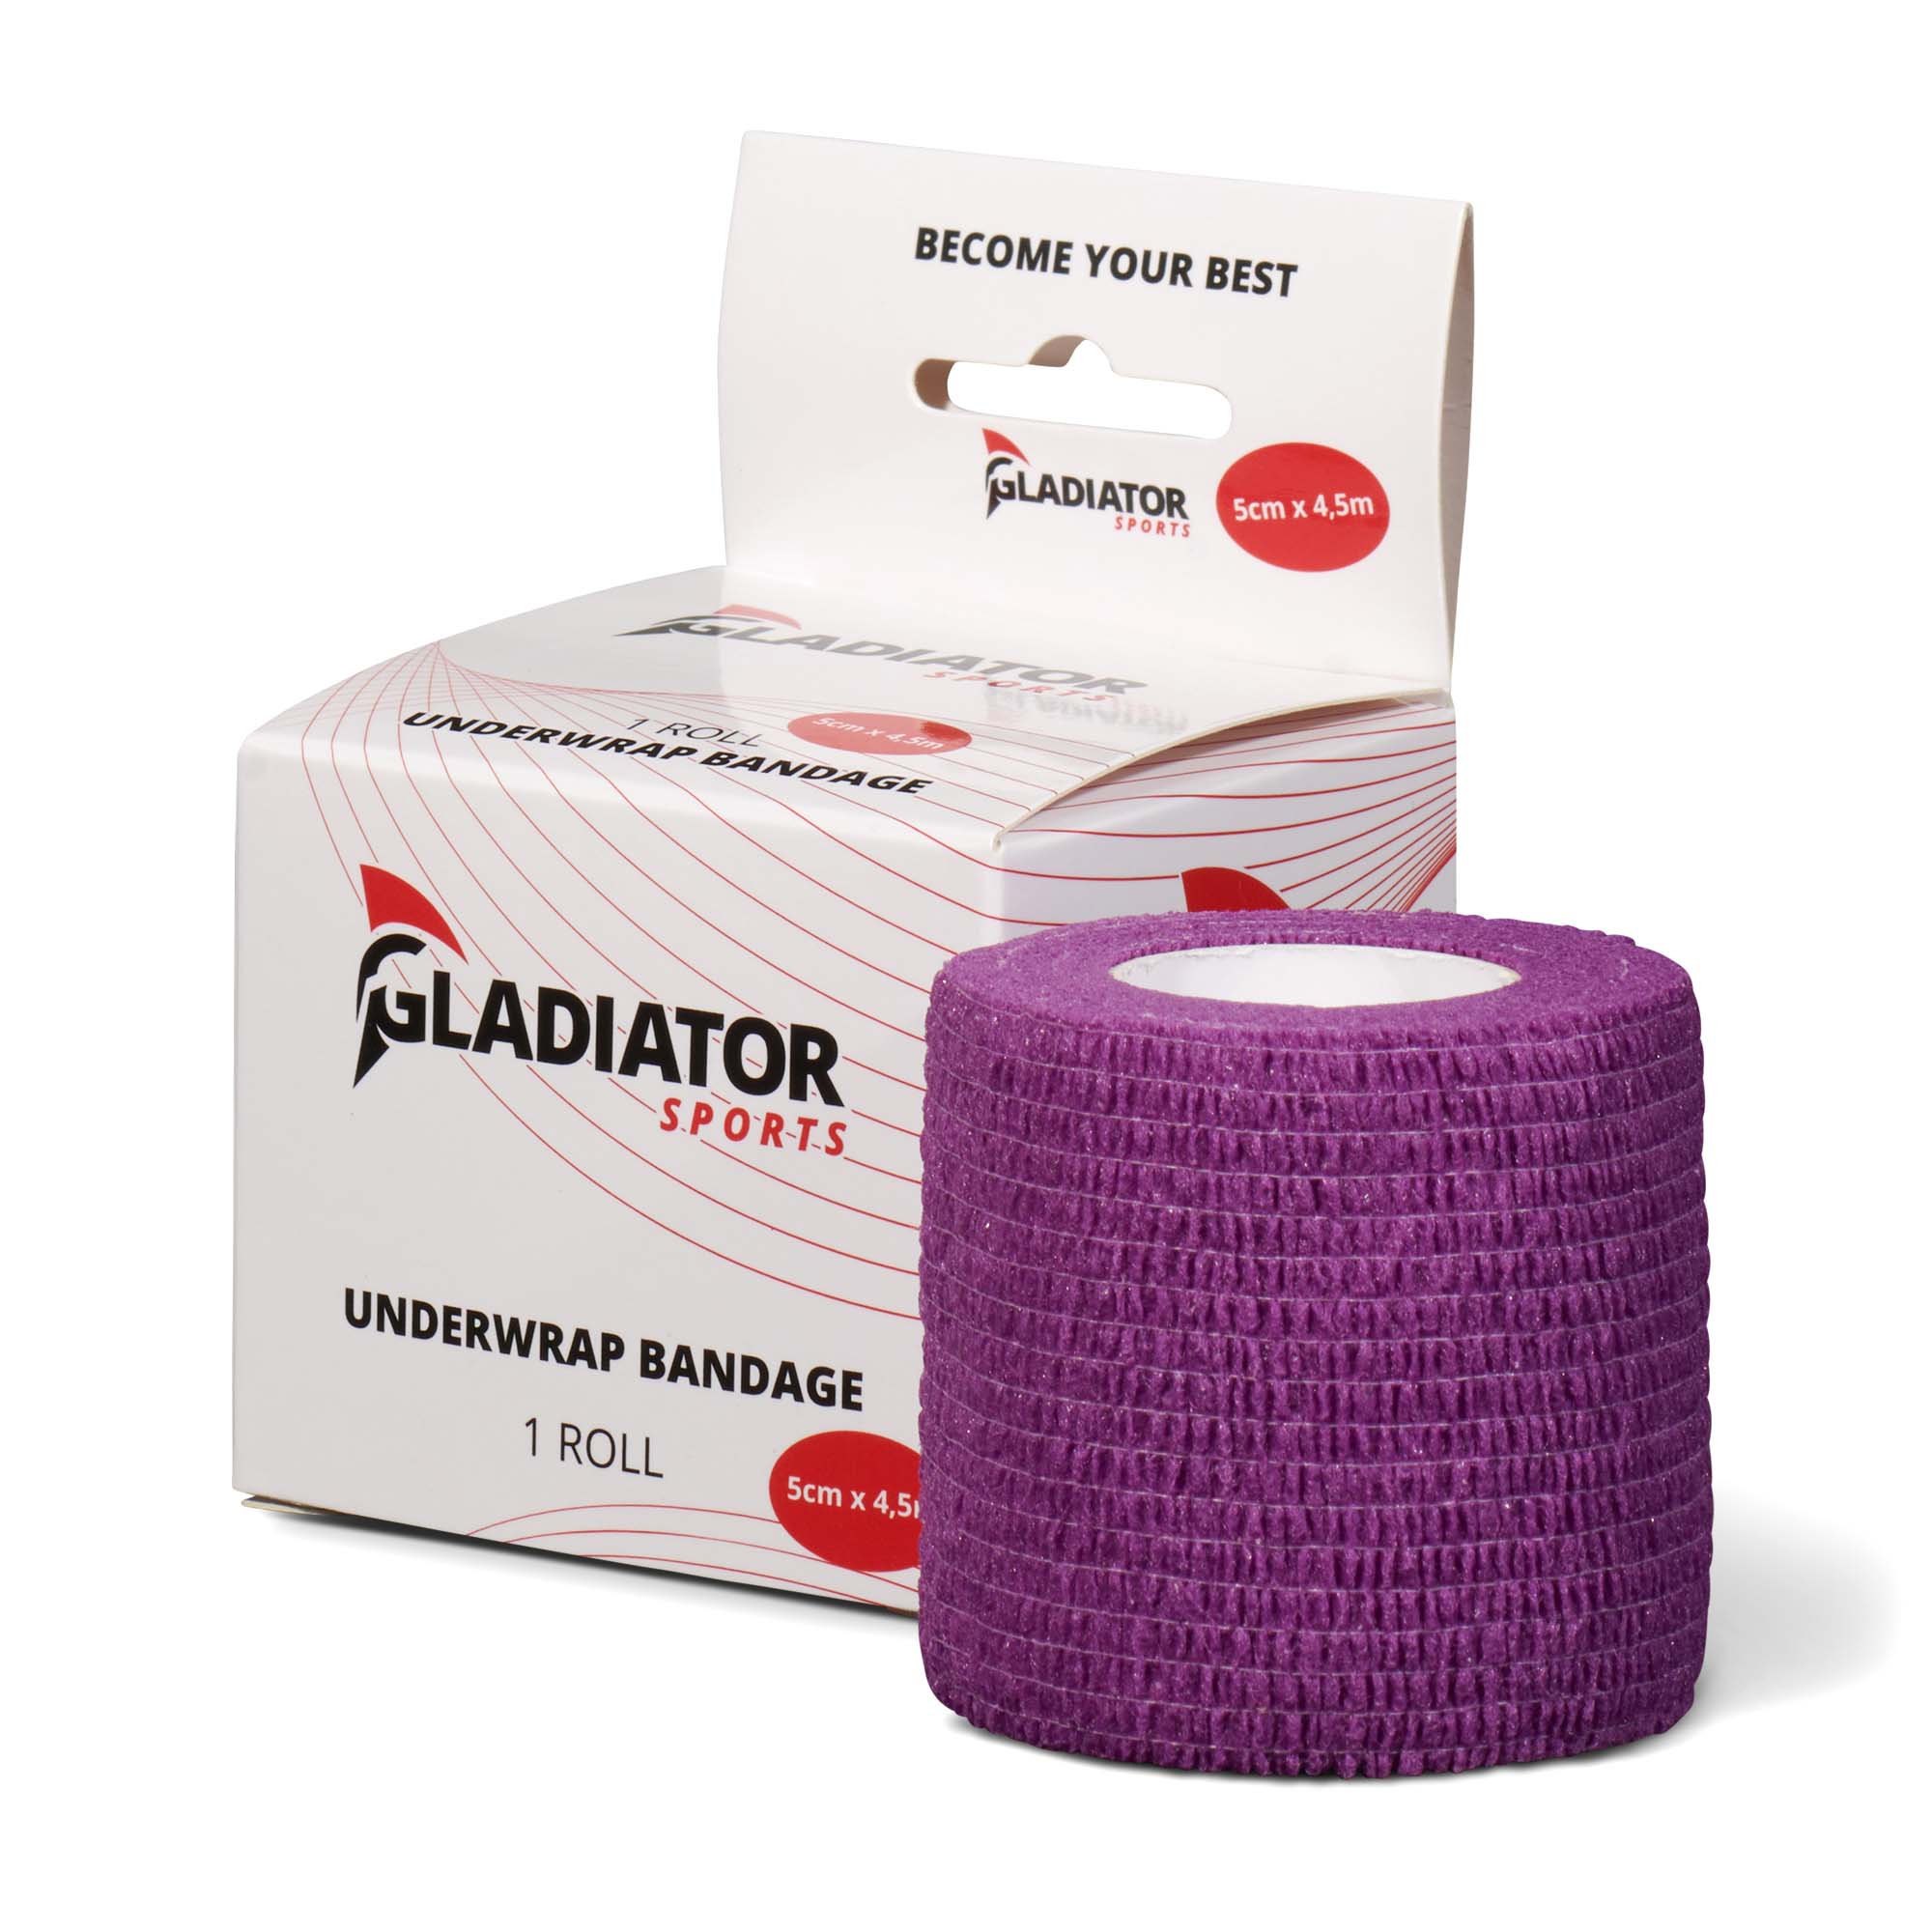 Gladiator Sports underwrap bandage per roll with box purple